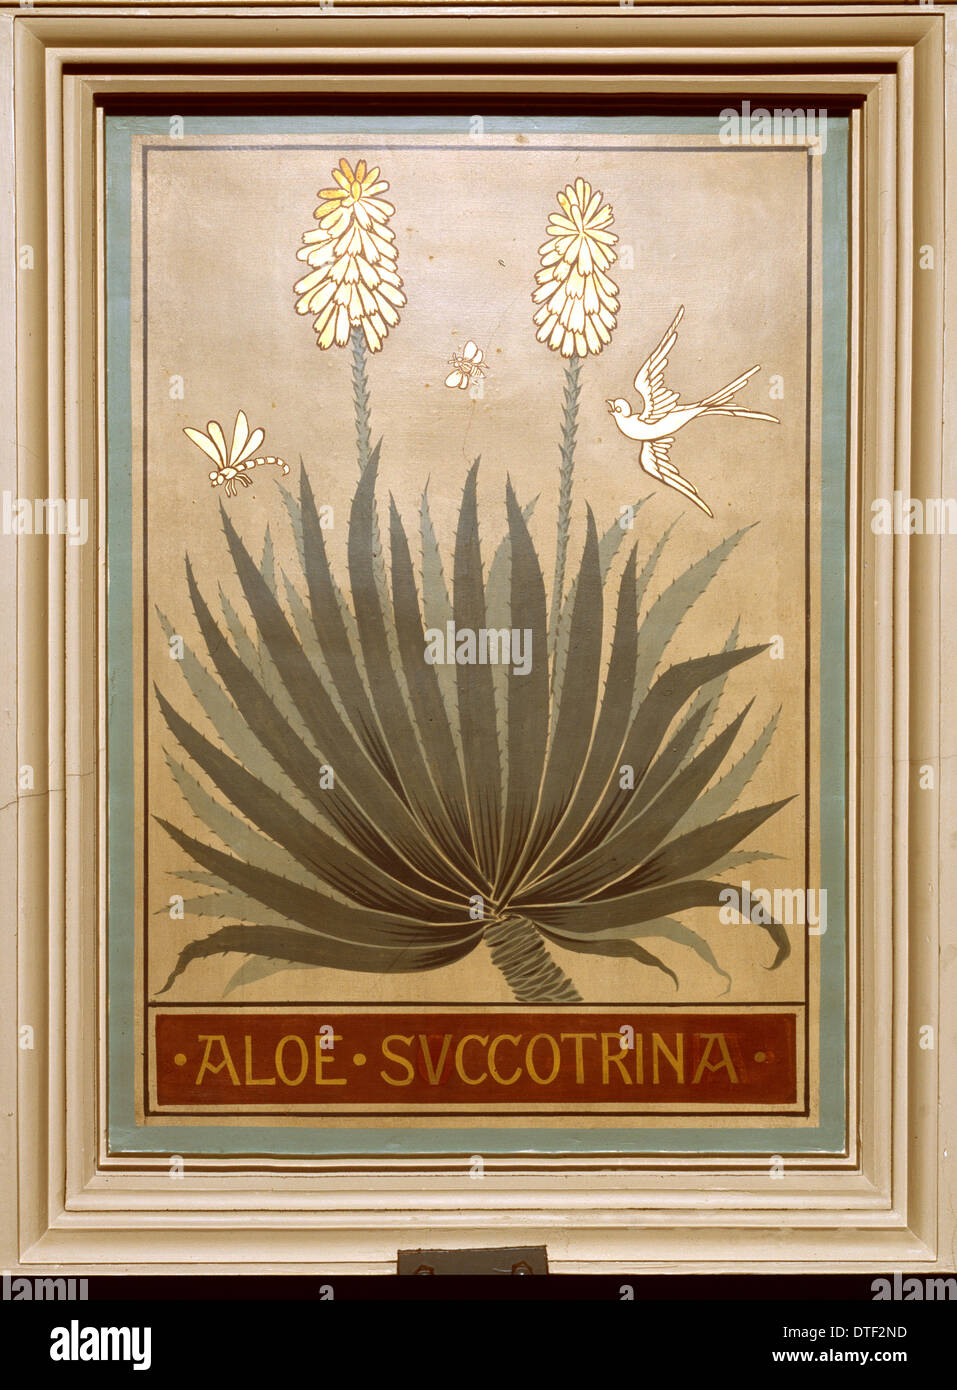 Aloe succotrina, fynbos aloe Foto Stock